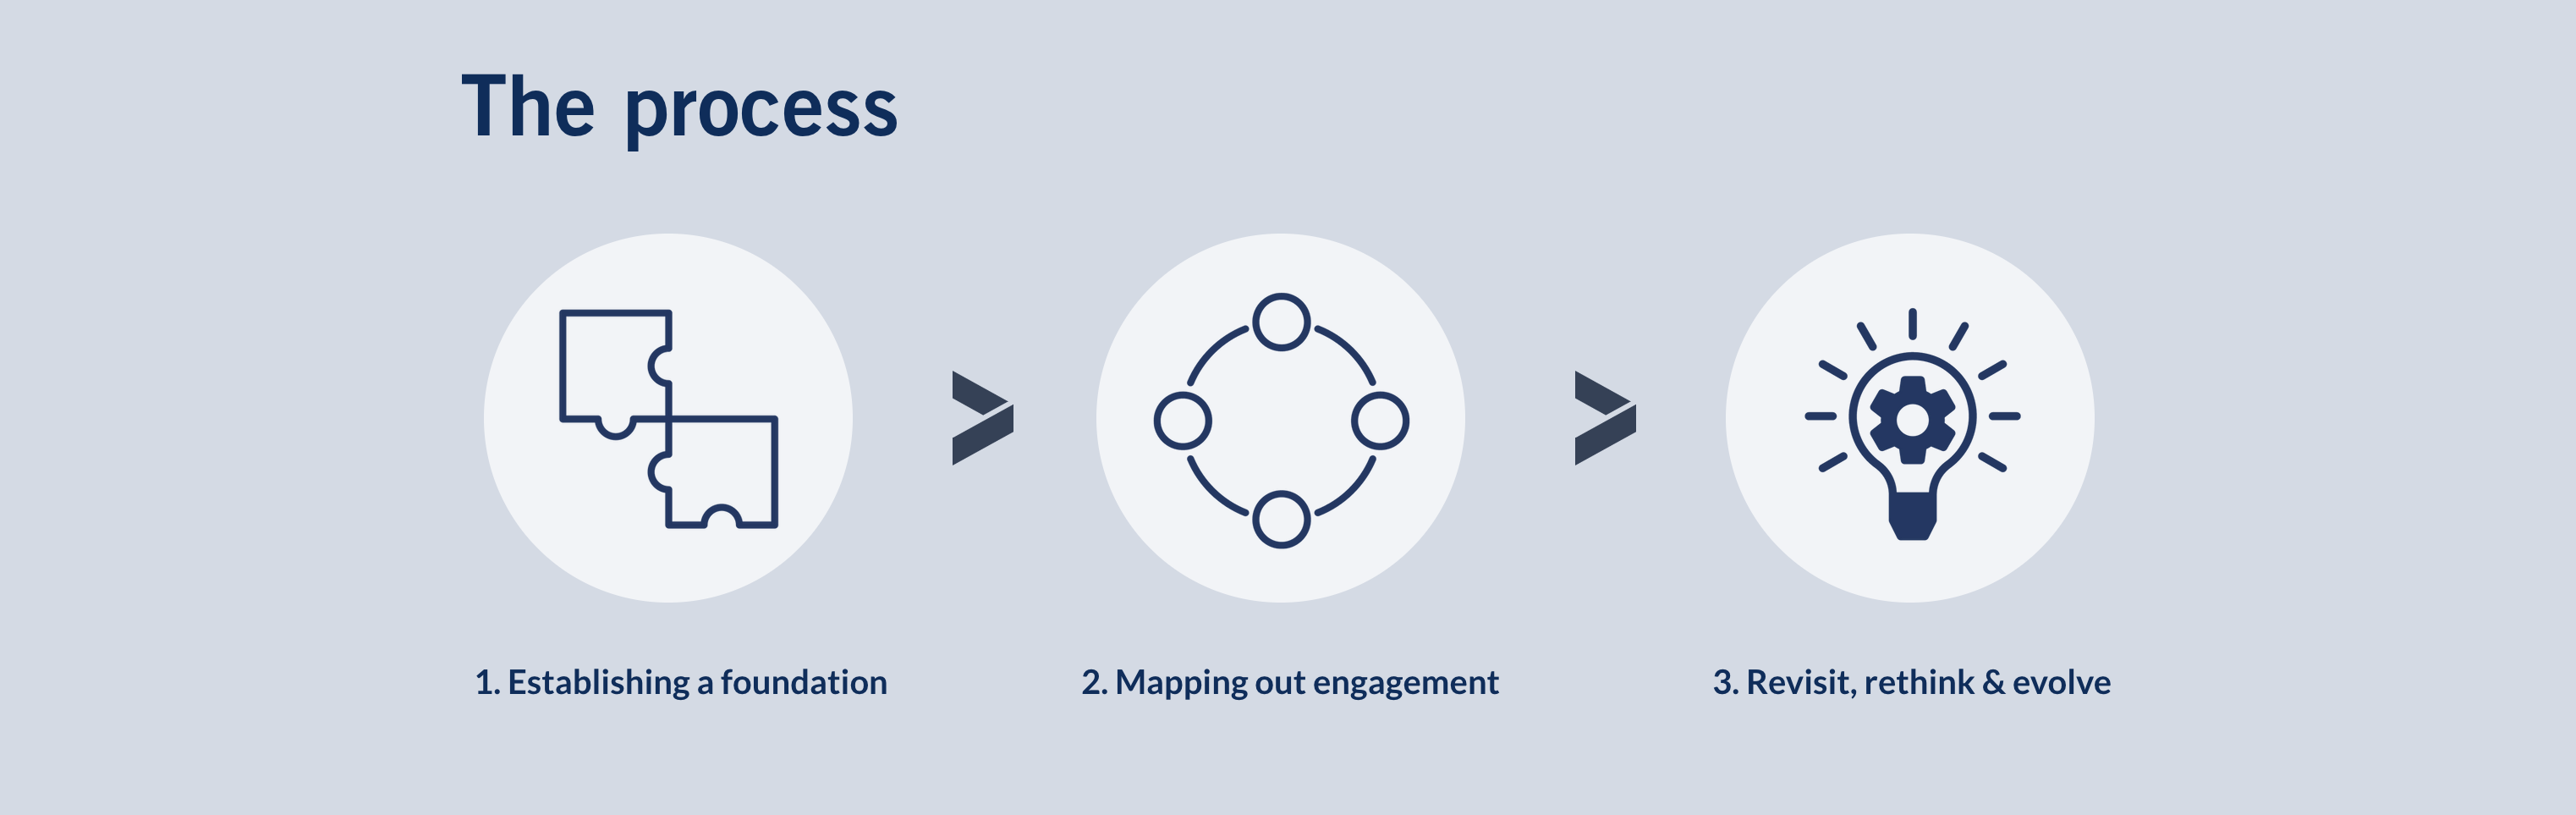 UTSC's partnership & engagement framework stages